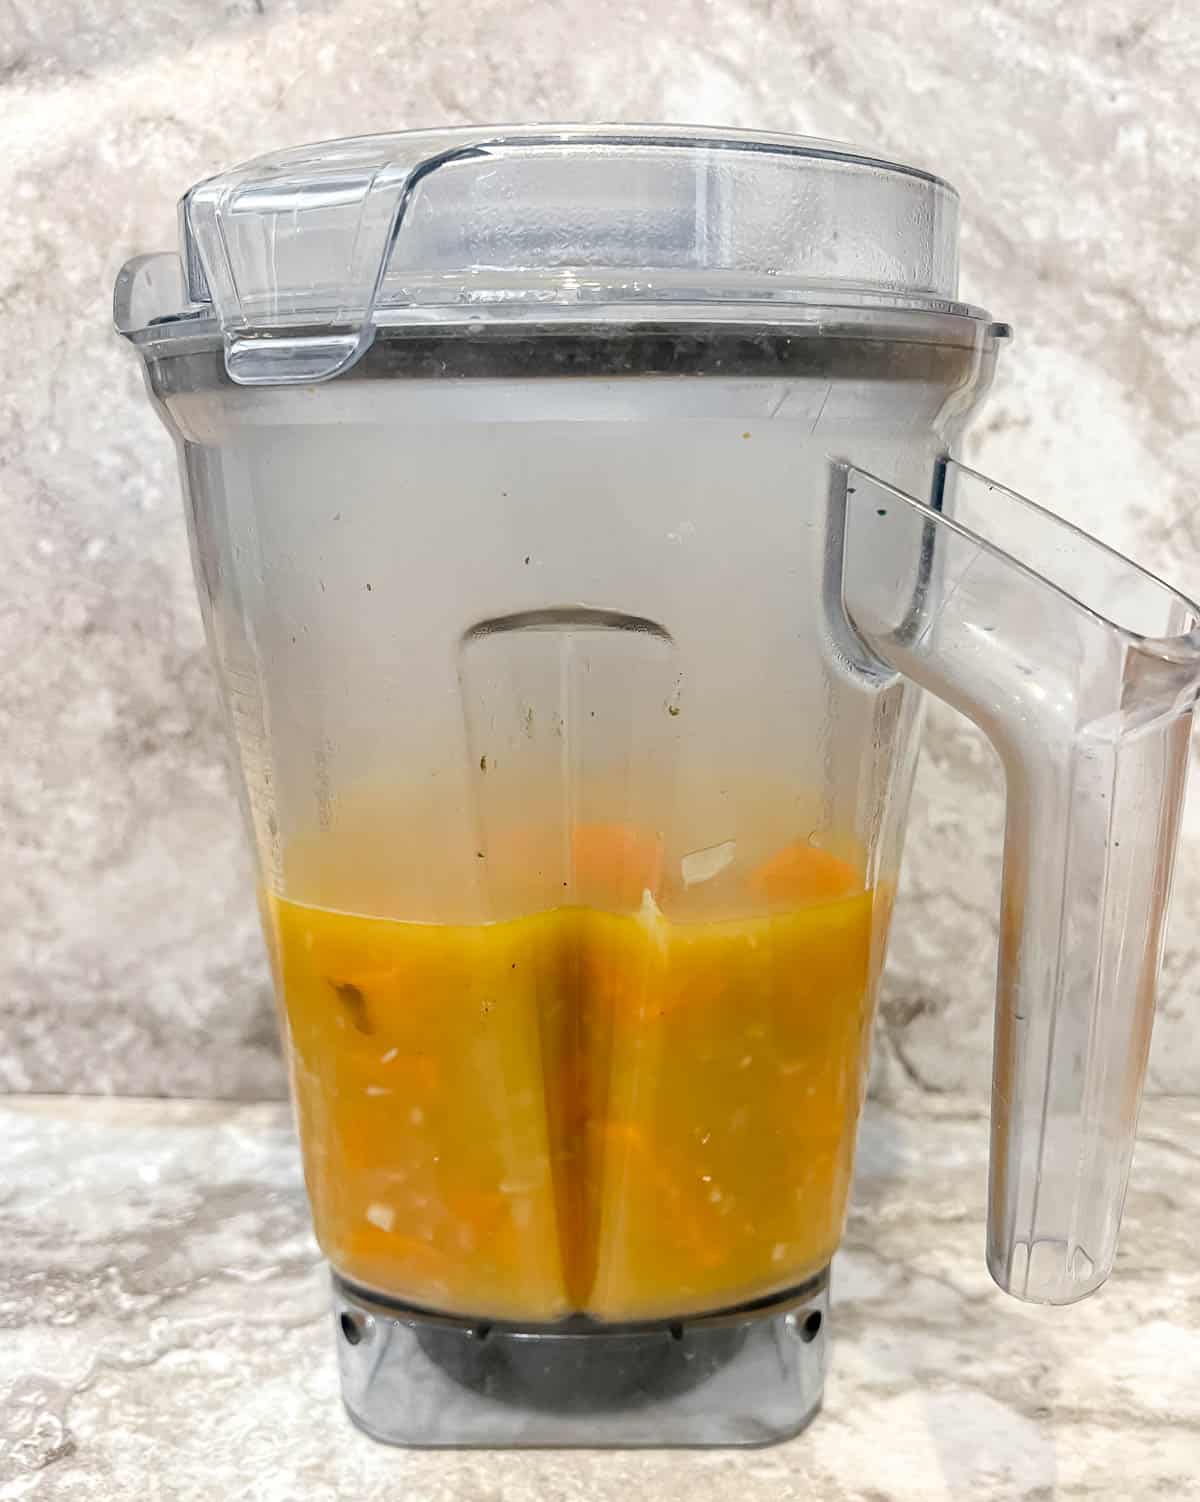 Pumpkin and sweet potato soup in a blender before blending.